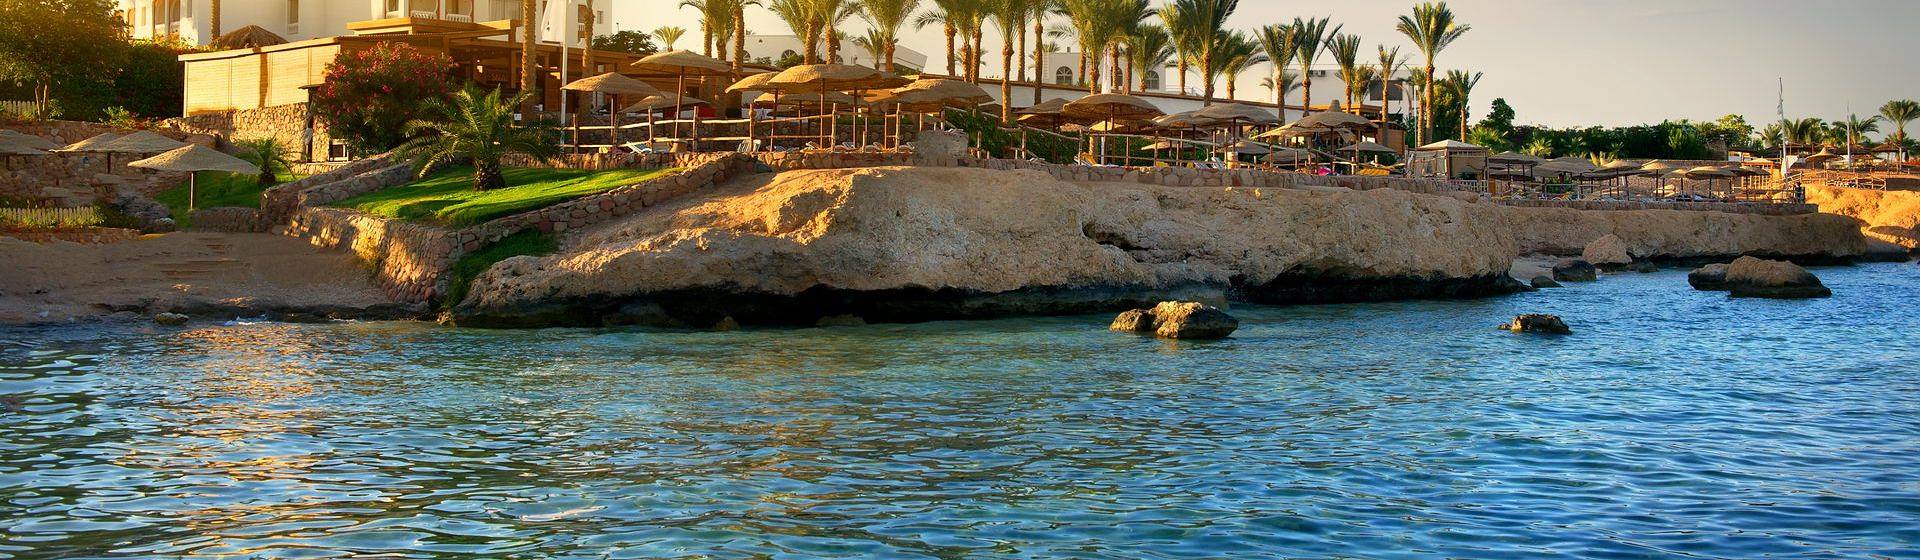 Holidays to Sharm el Sheikh Image